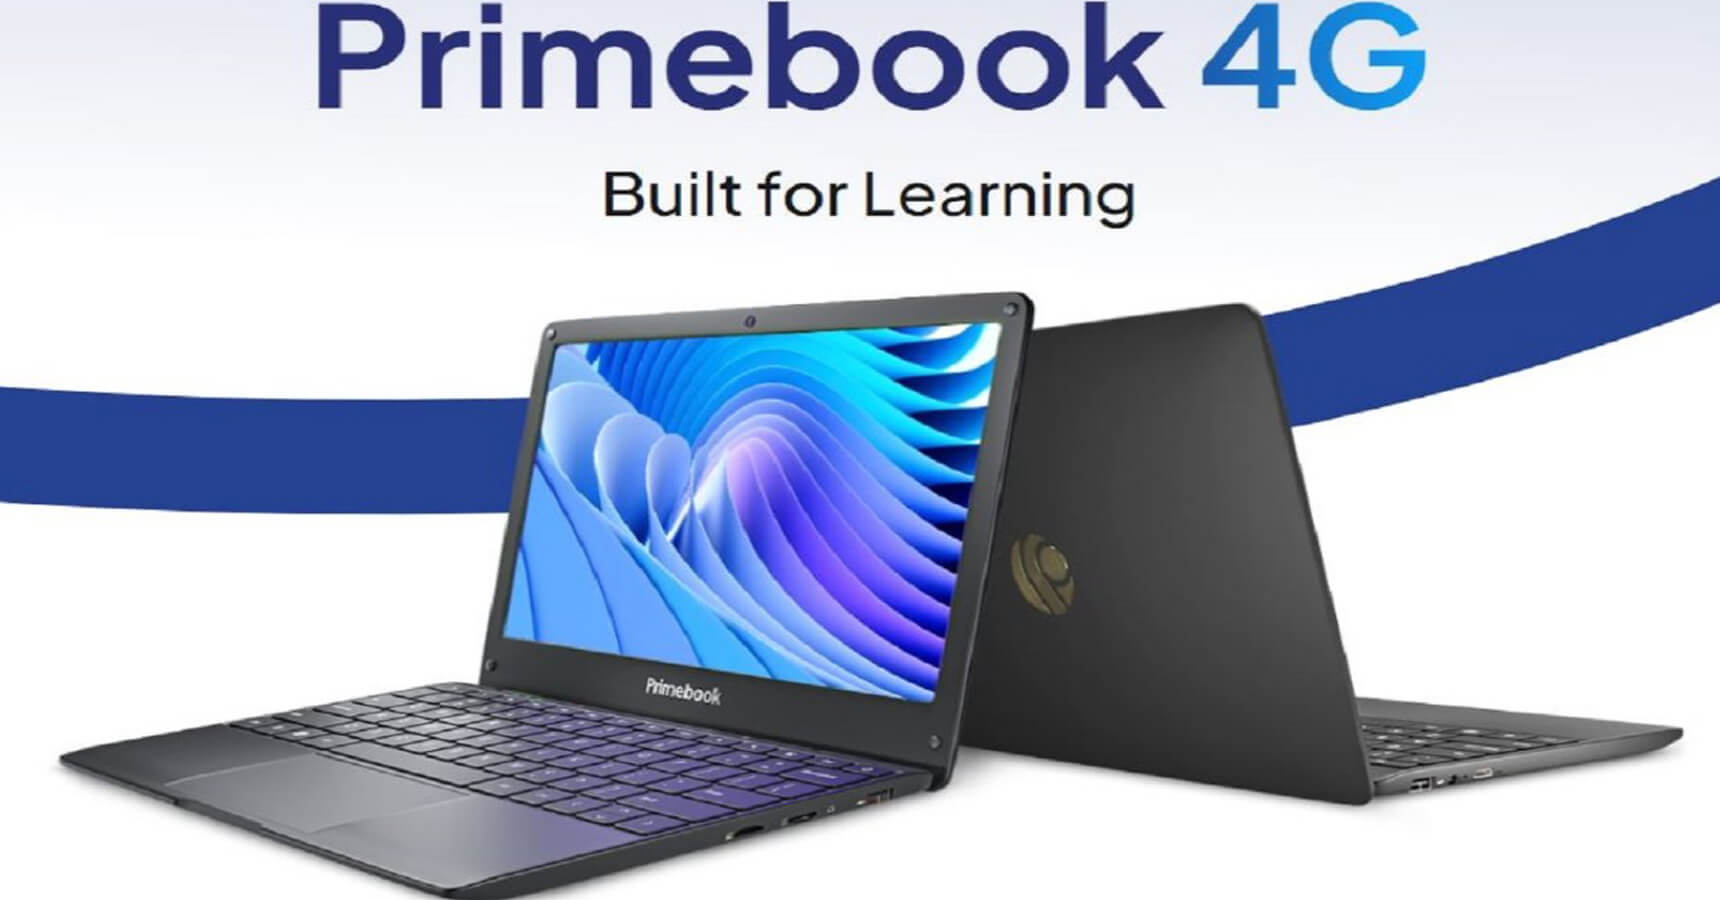 Primebook 4G Laptop Sale in India